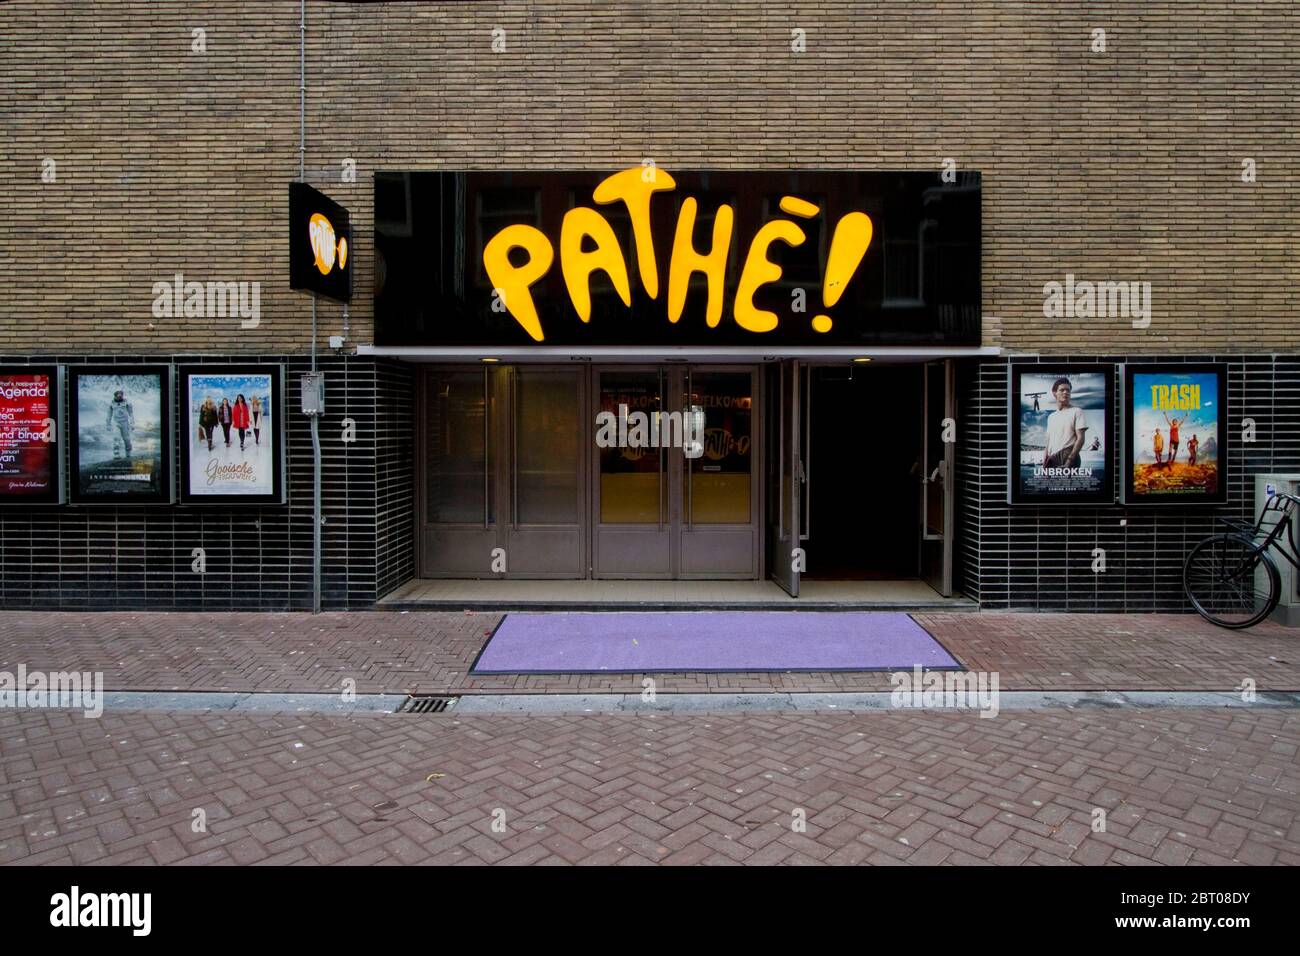 Ingresso al Cinema 'Pathé', Amsterdam 2015 Foto Stock